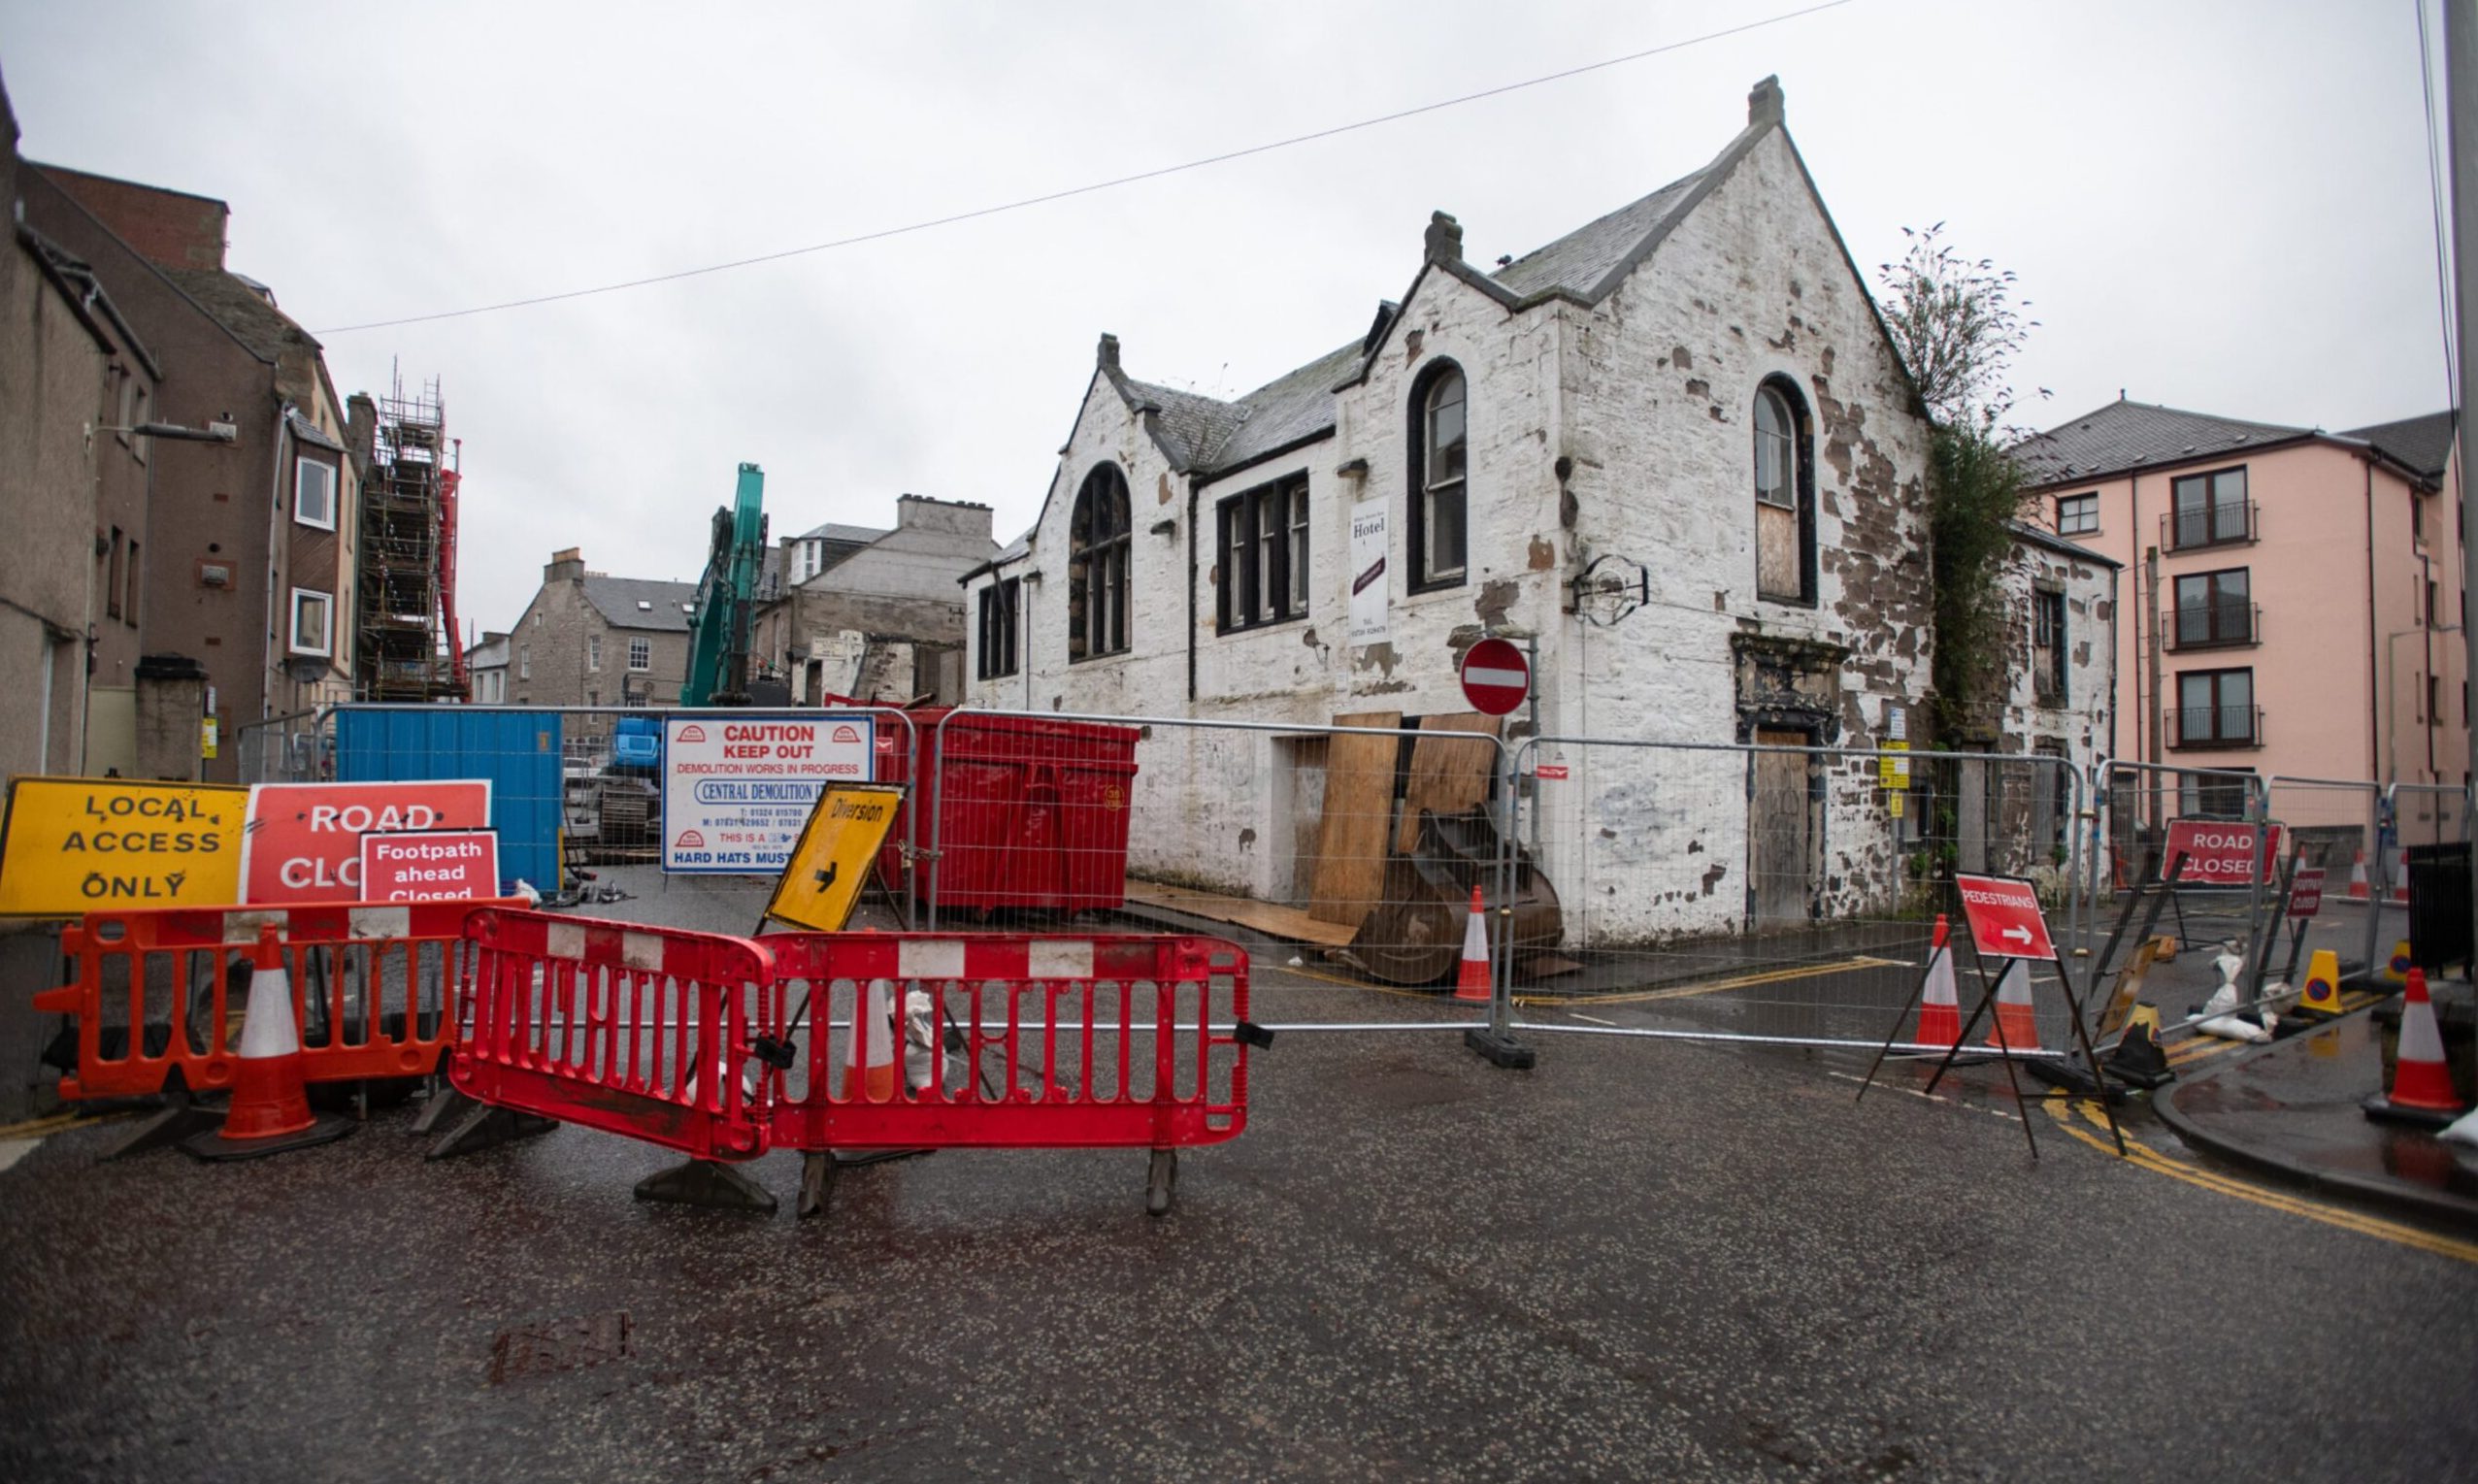 Demolition work on The White Horse Inn has started.